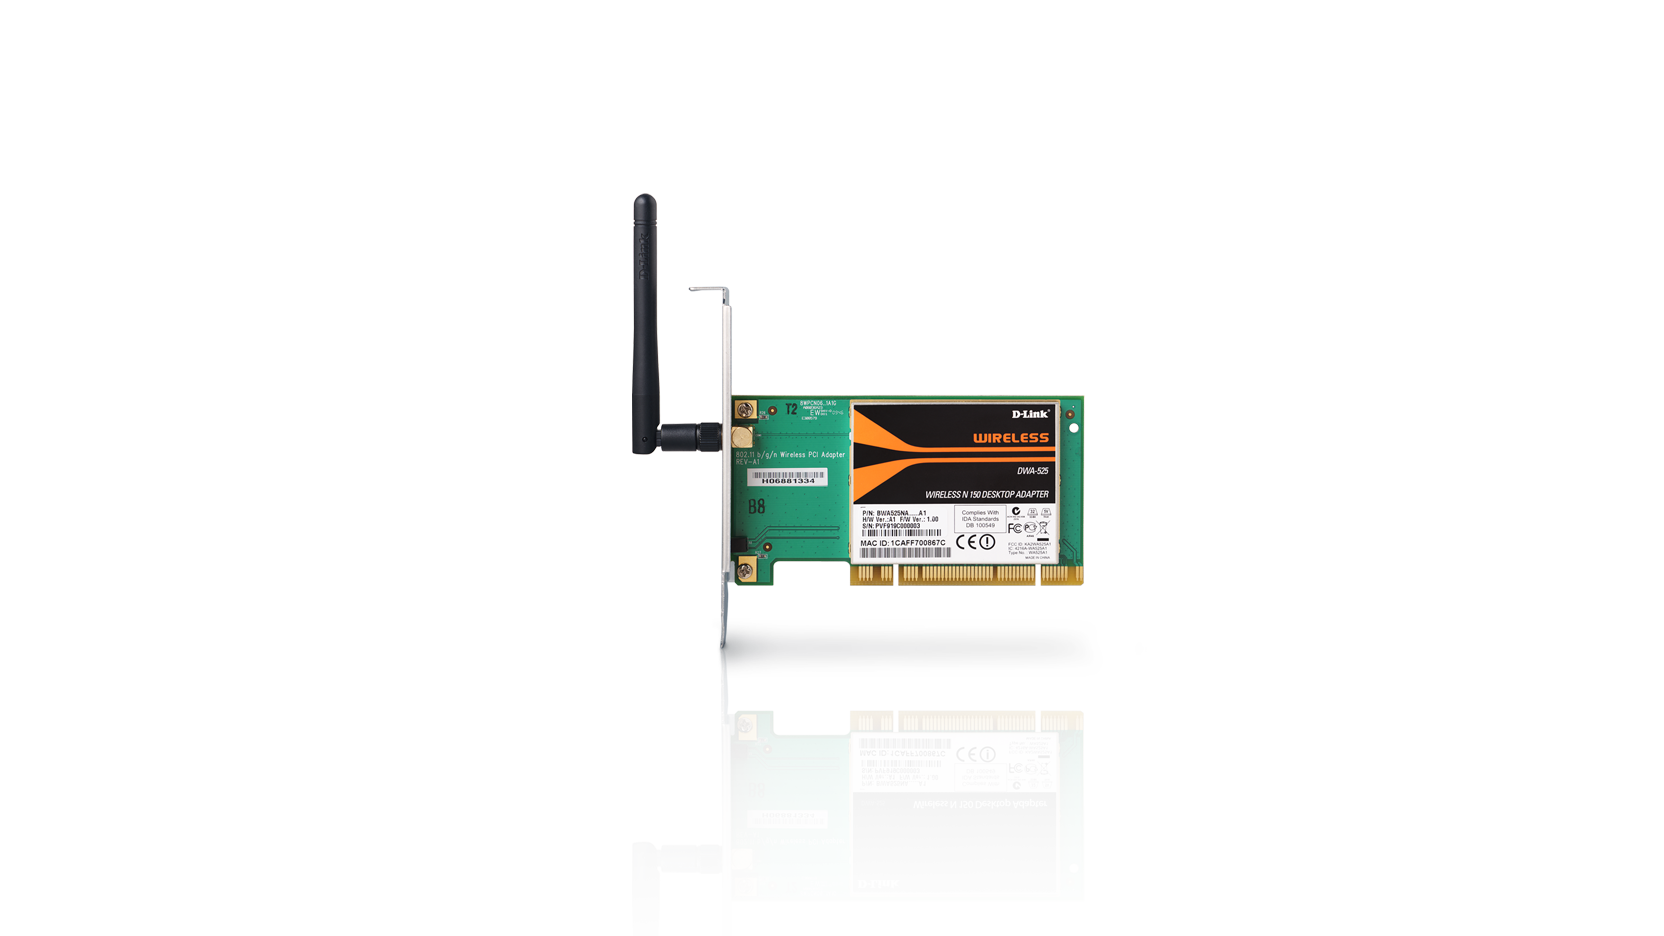 Wireless N 150 PCIe Adapter with external Antenna (DWA-525/EU)